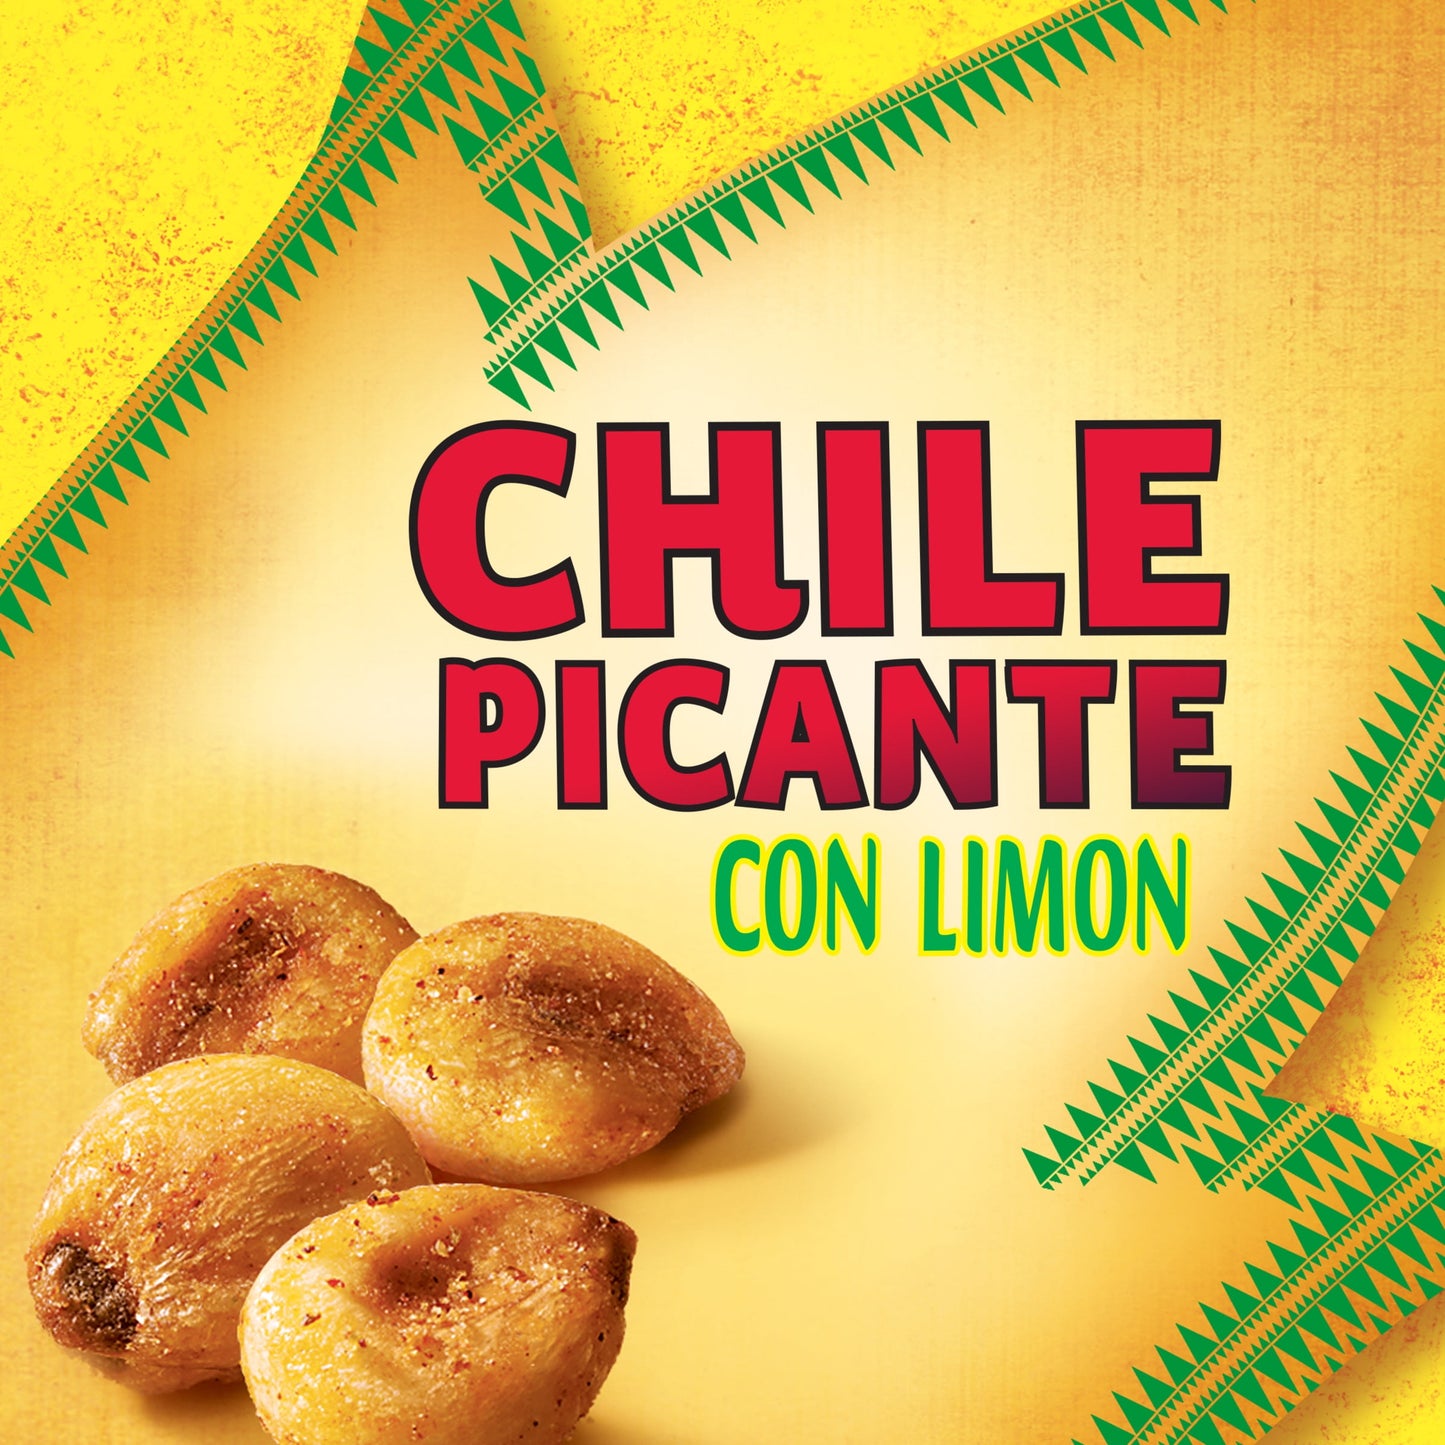 Chile Picante Con Limon Crunchy Corn Kernels Snack, 1.7 Oz Plastic Pouch (Pack of 18)